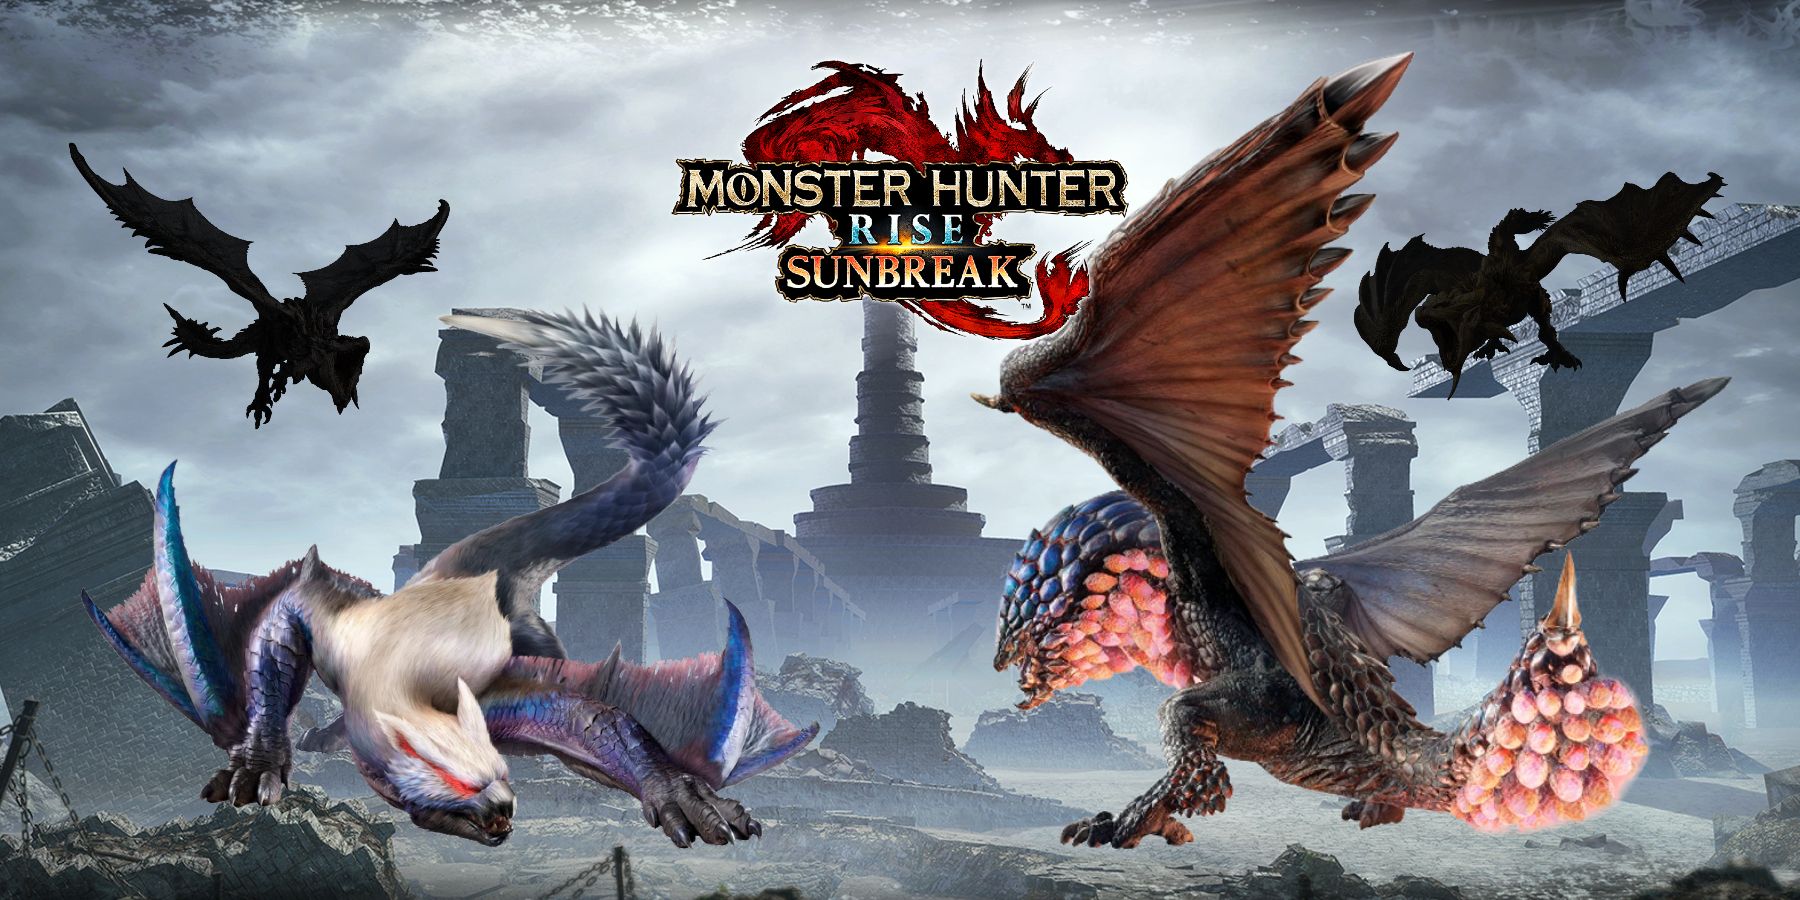 Monster Hunter Rise: Sunbreak showcasing first big update next